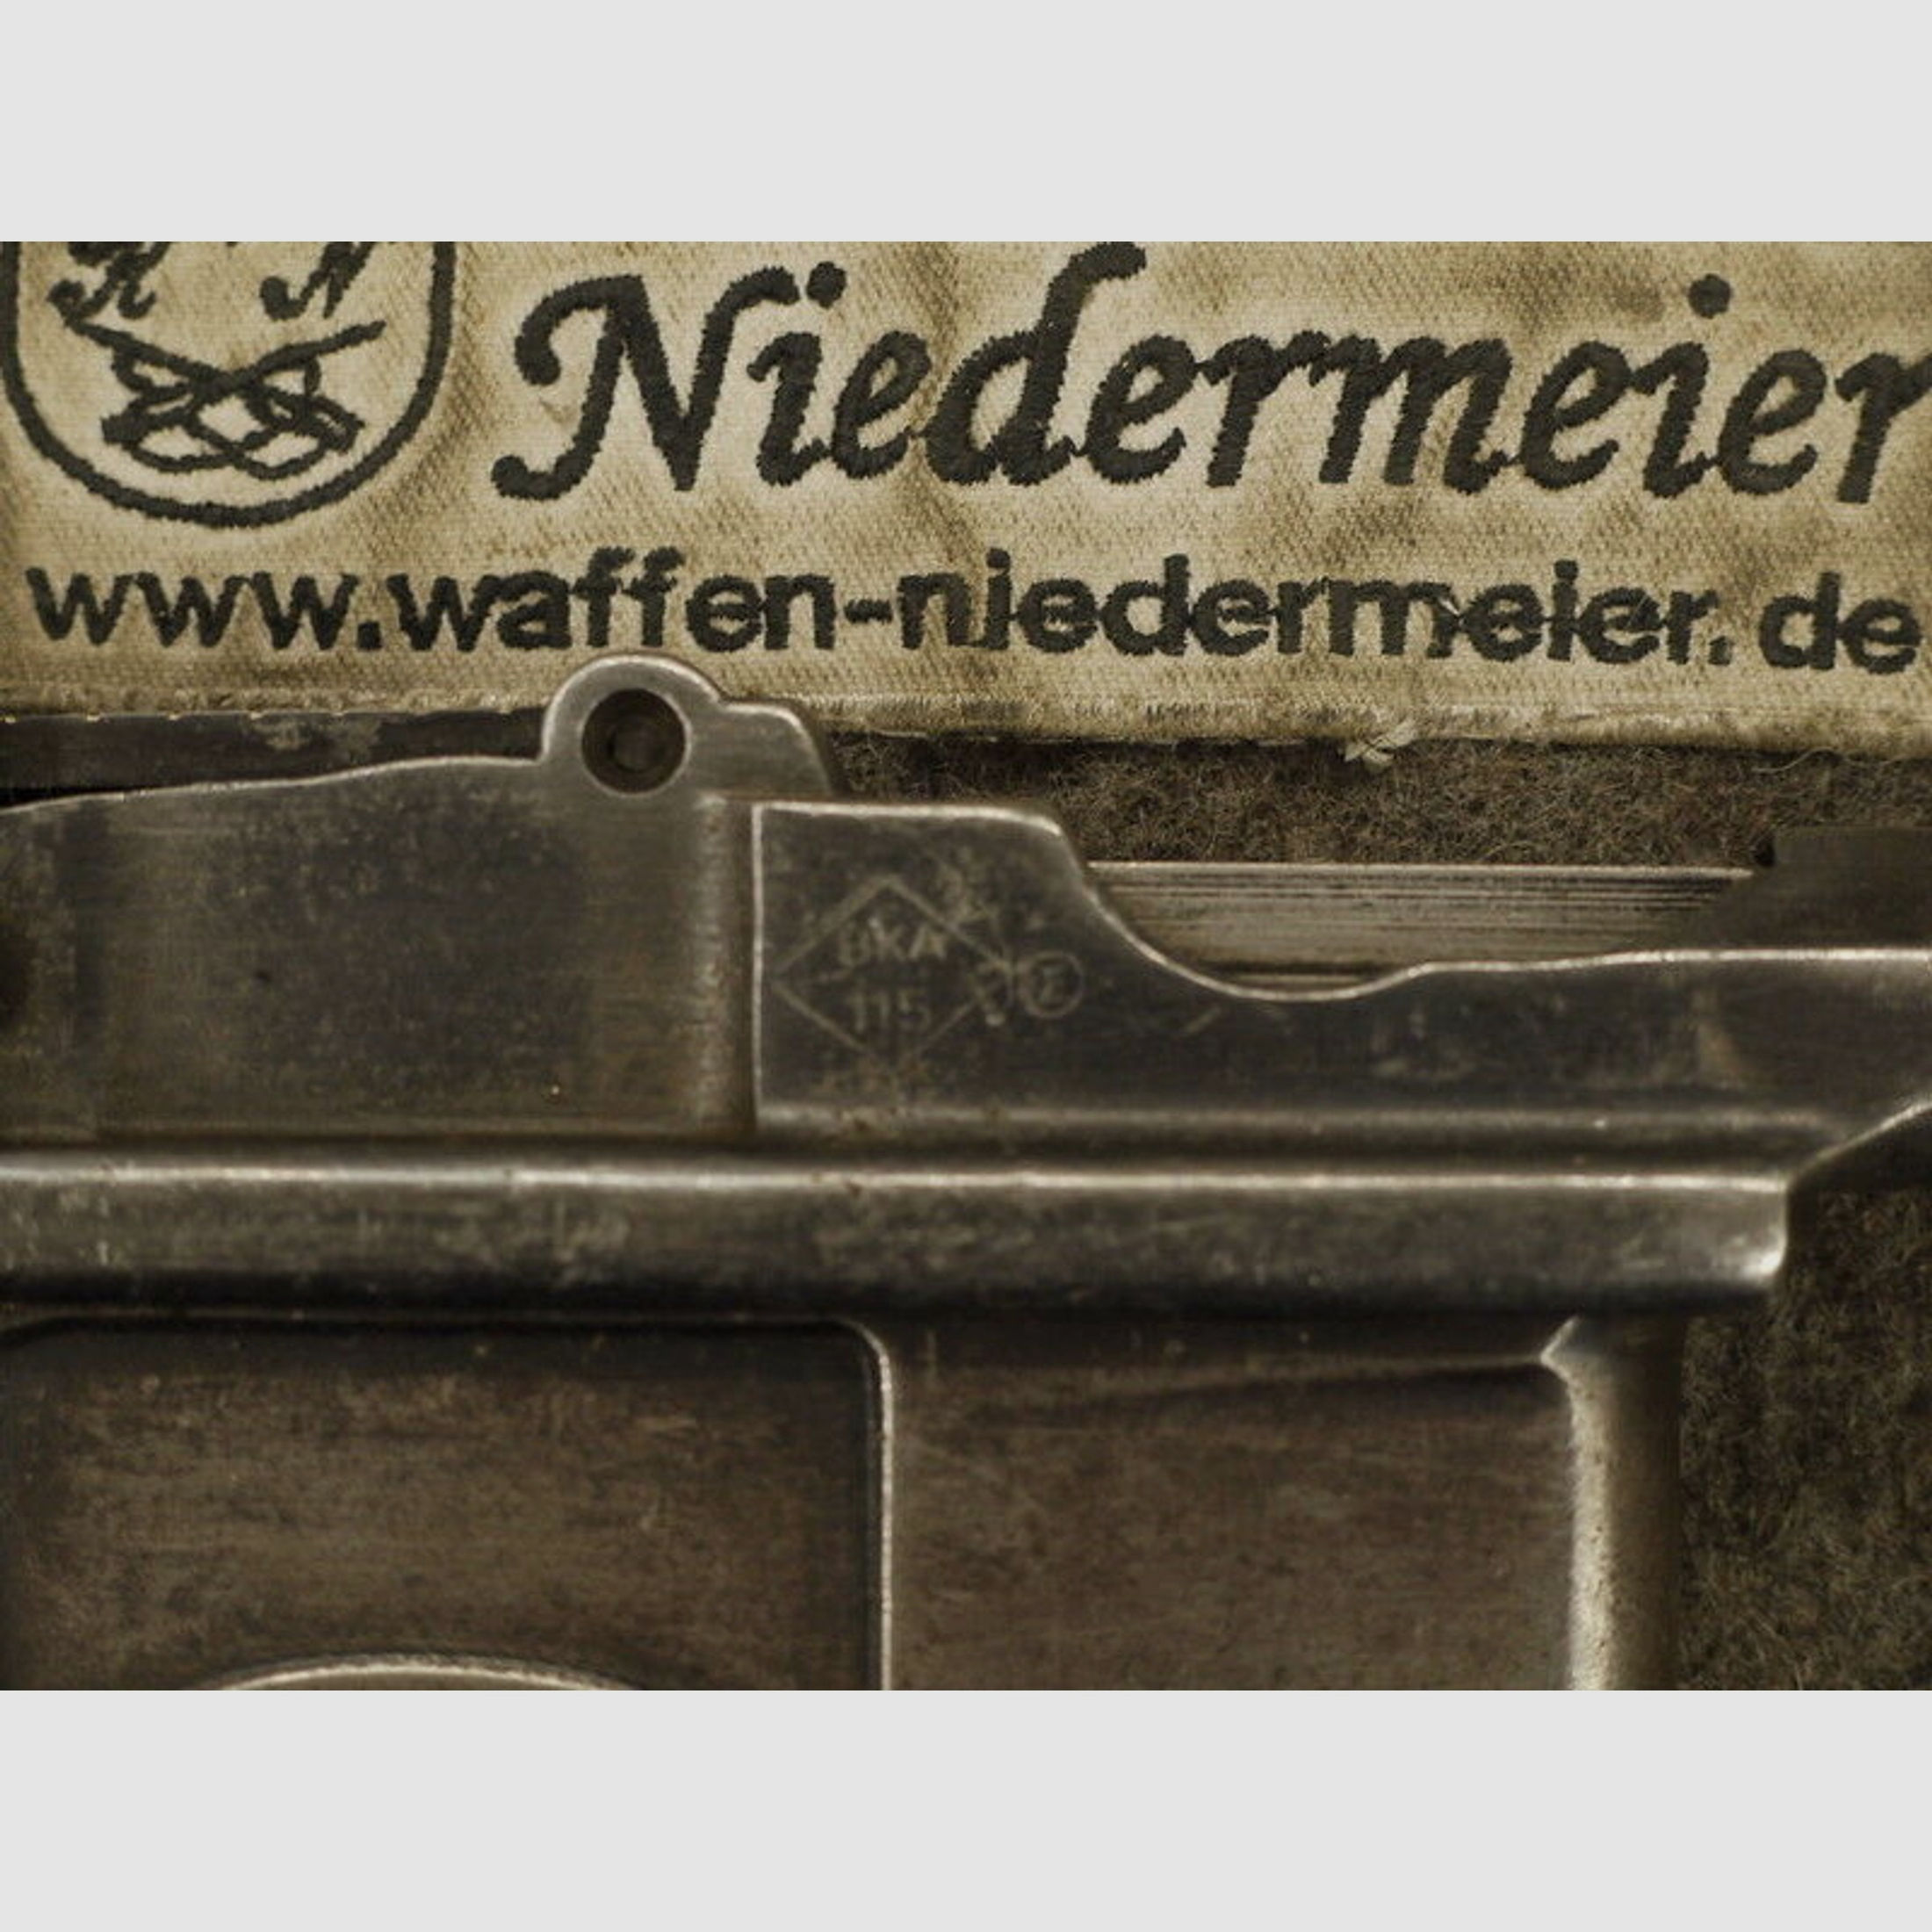 Mauser	 C96 1912 (Altdeko) ehemals 7,63mmMauser